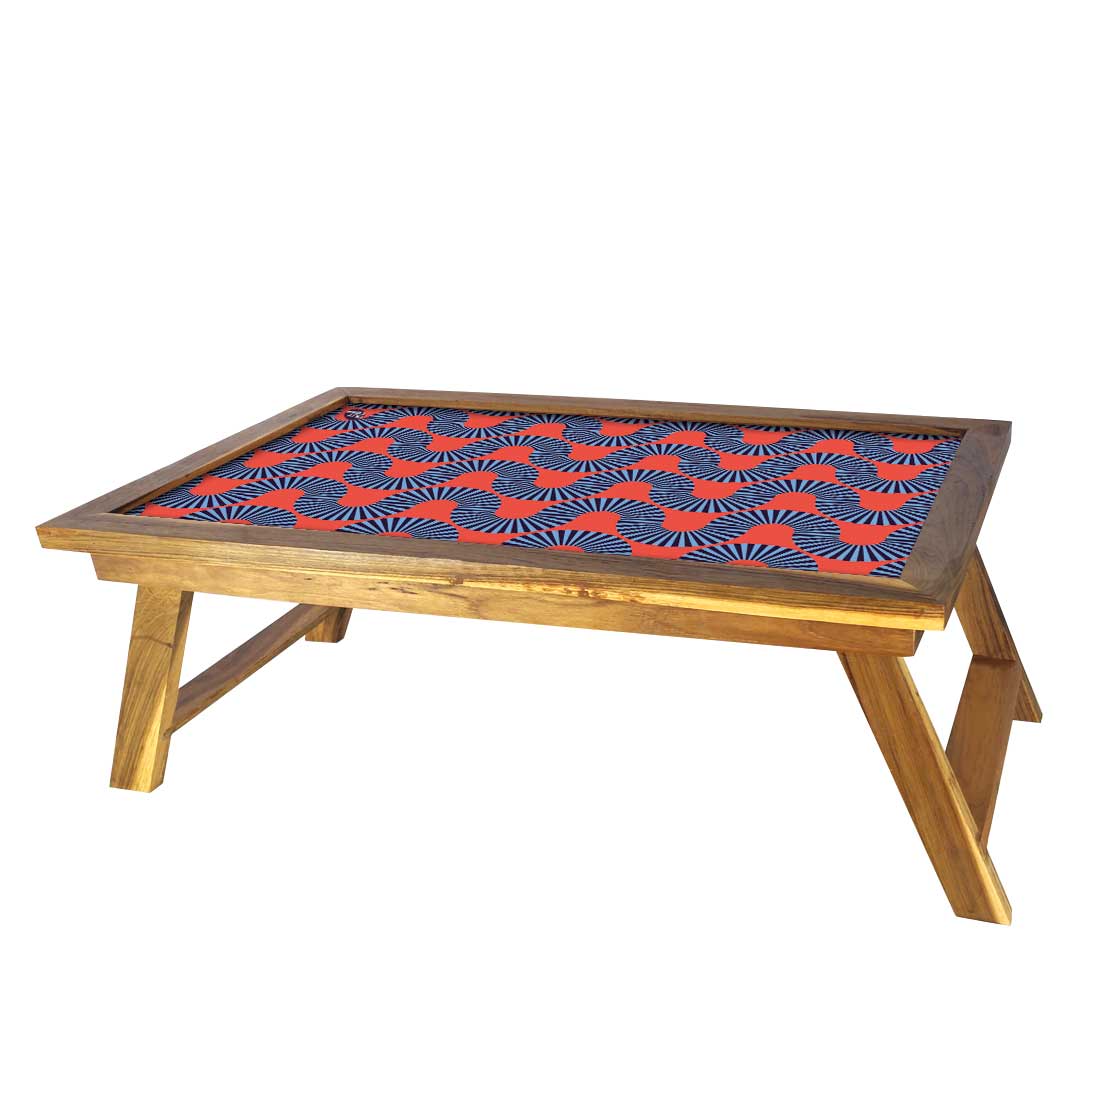 Bed Breakfast Table Wooden & Tray for Laptop Desk - Retro Pattern Nutcase